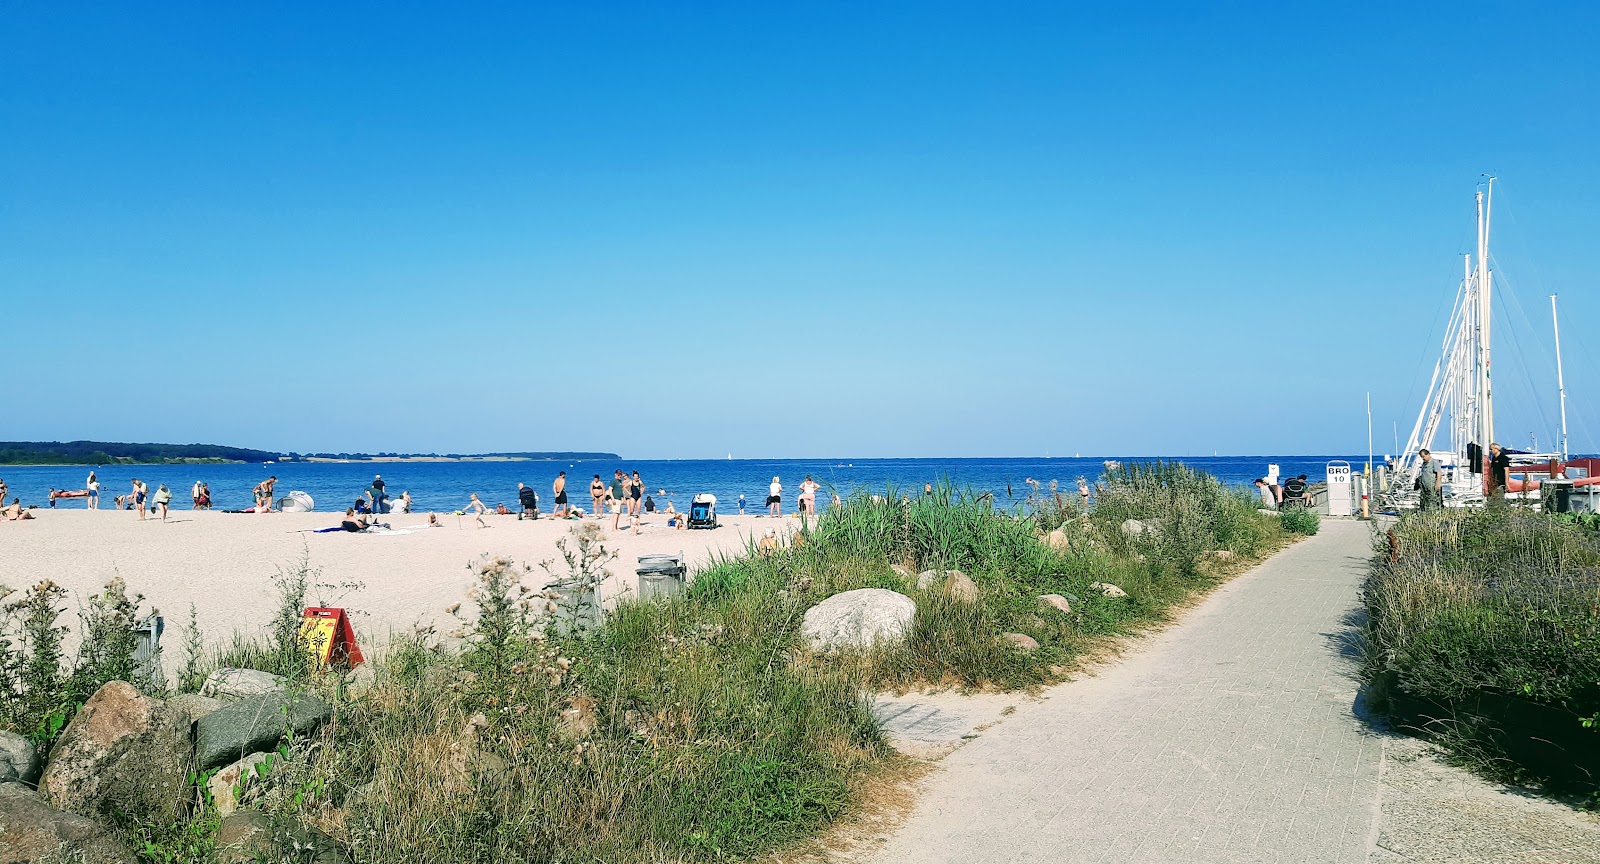 Nordstrand strand的照片 带有碧绿色纯水表面